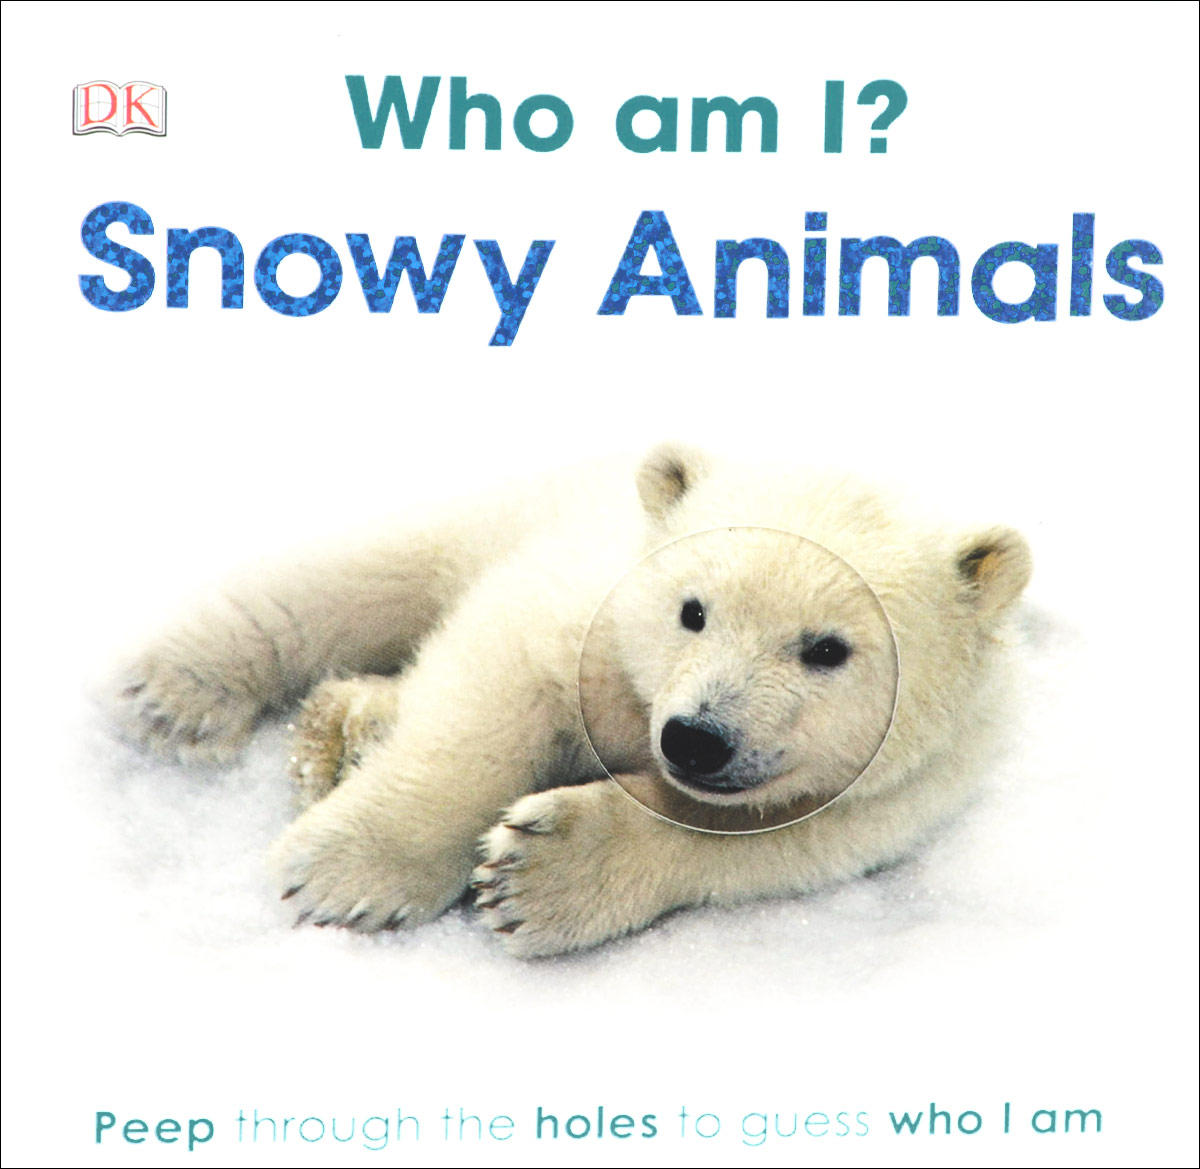 Who am I? Snowy Animals